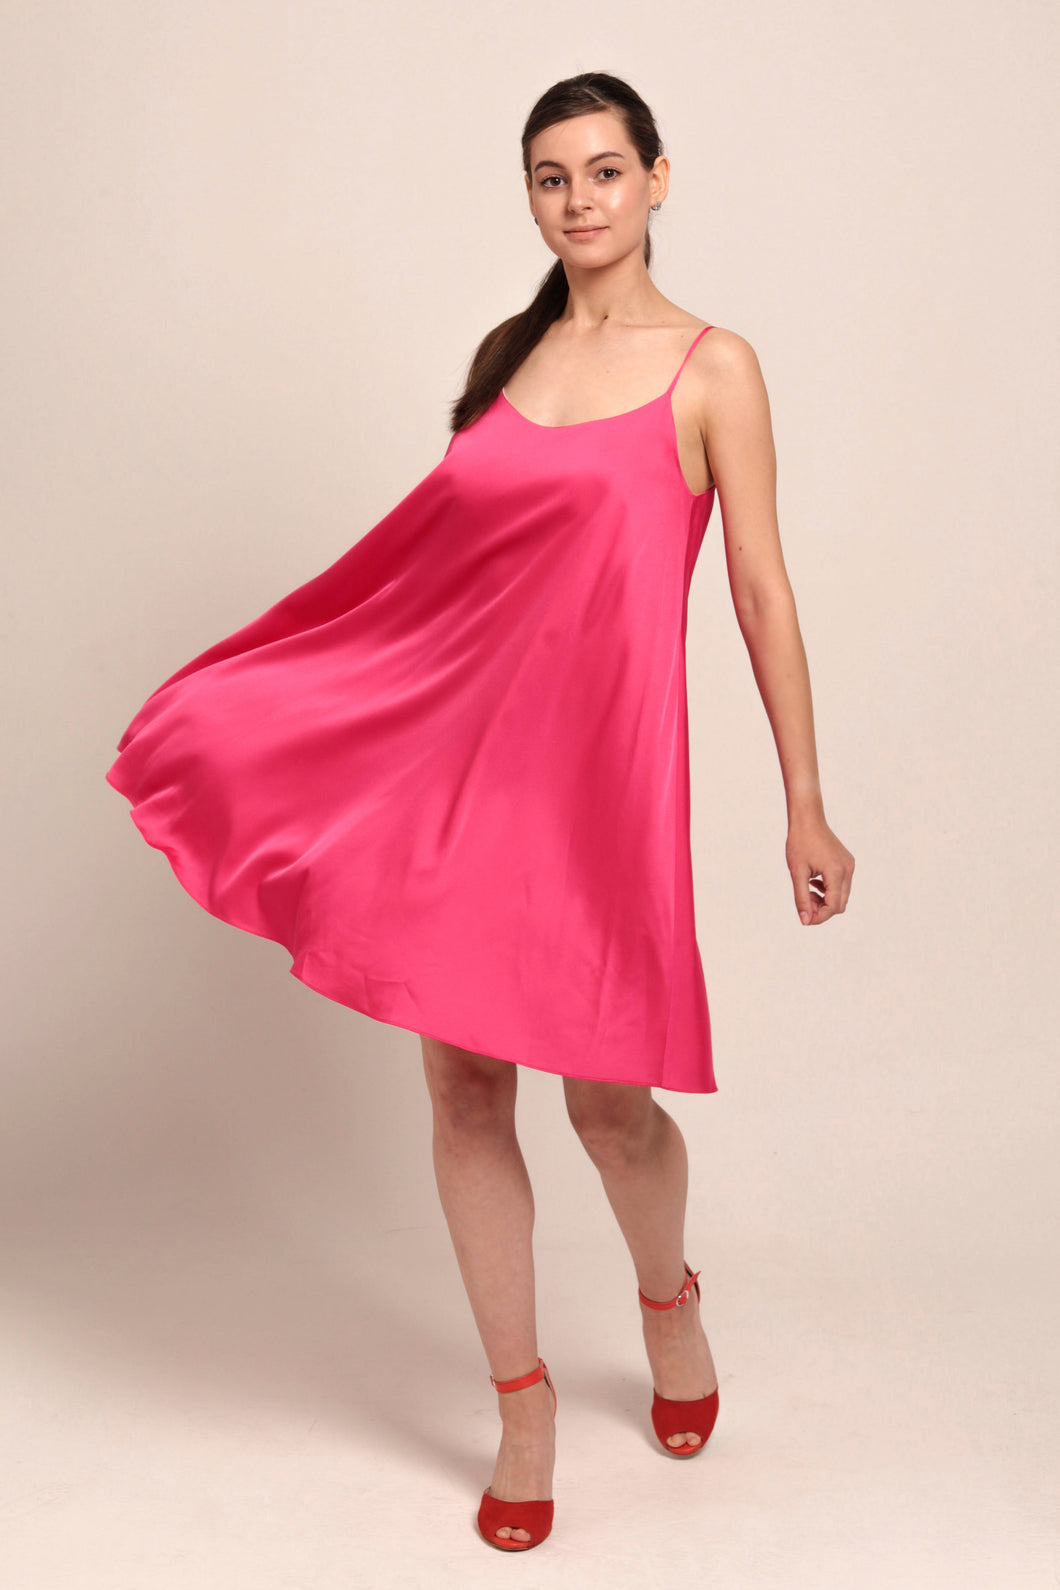 Juicy pink satin mini camisole dress